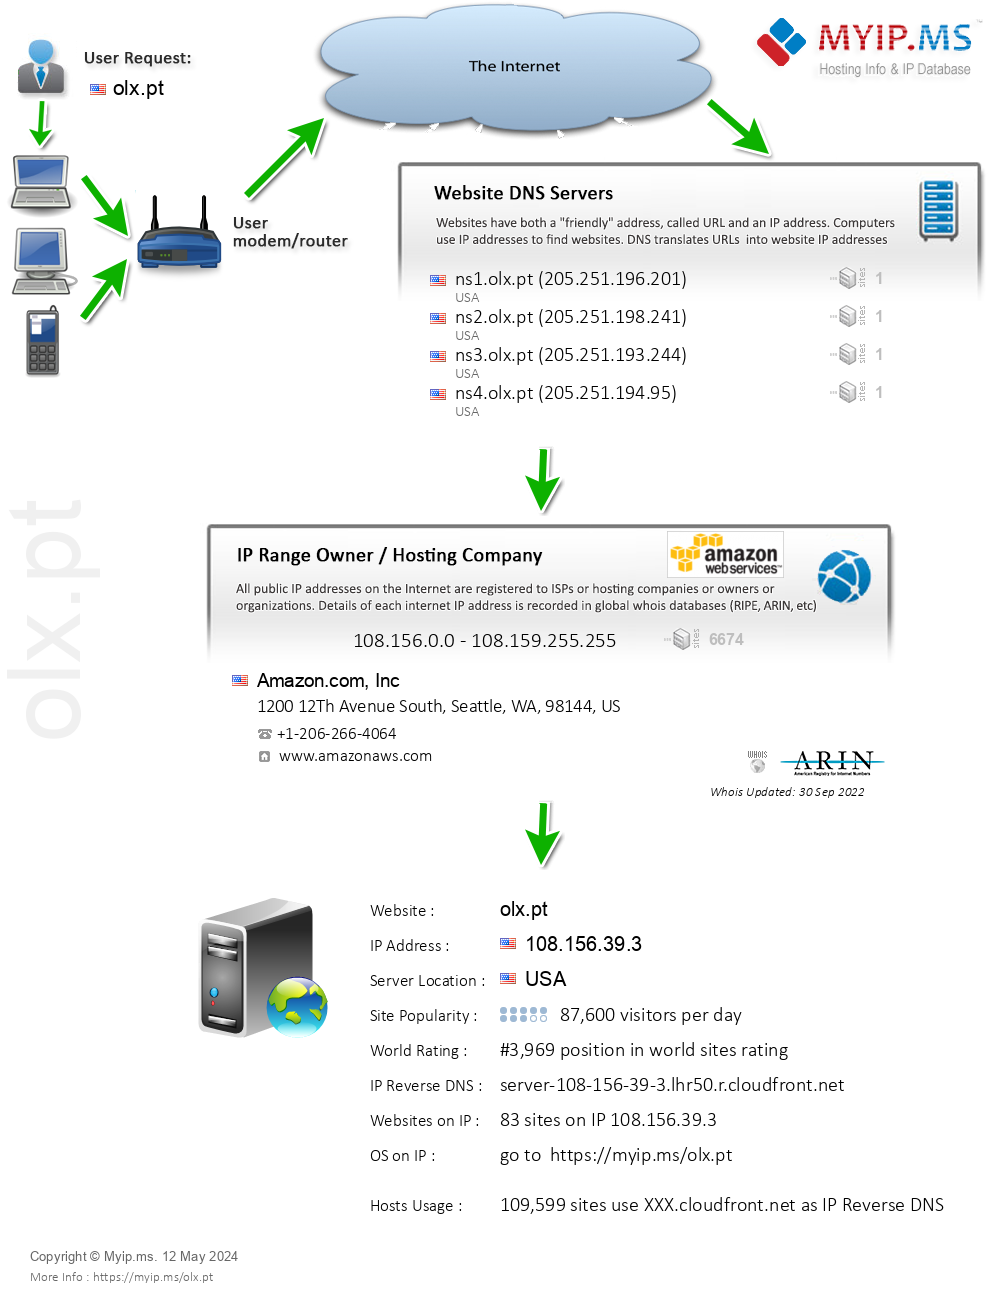 Olx.pt - Website Hosting Visual IP Diagram